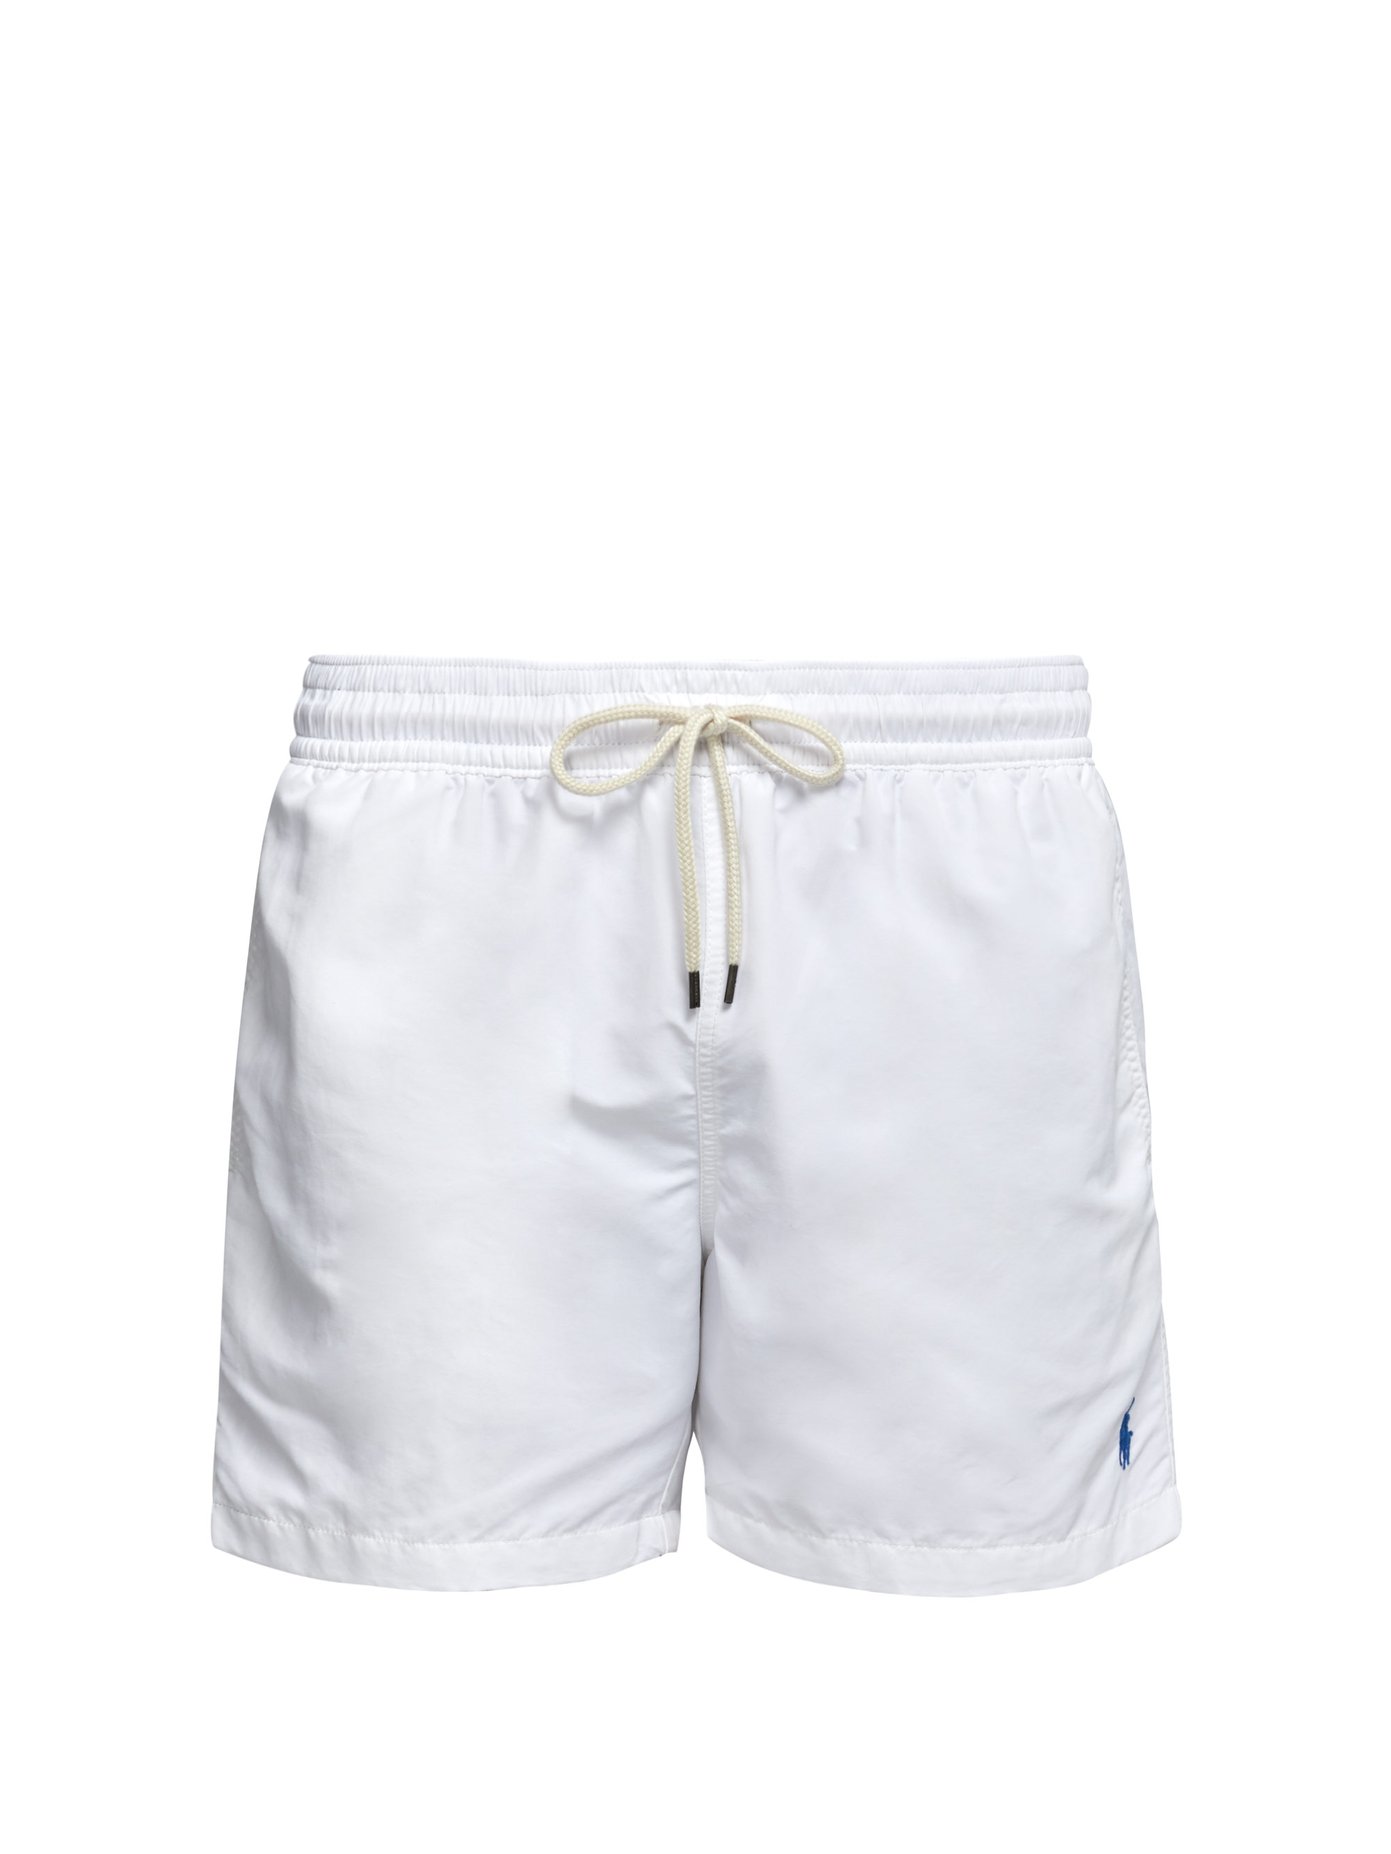 ralph lauren swim shorts white